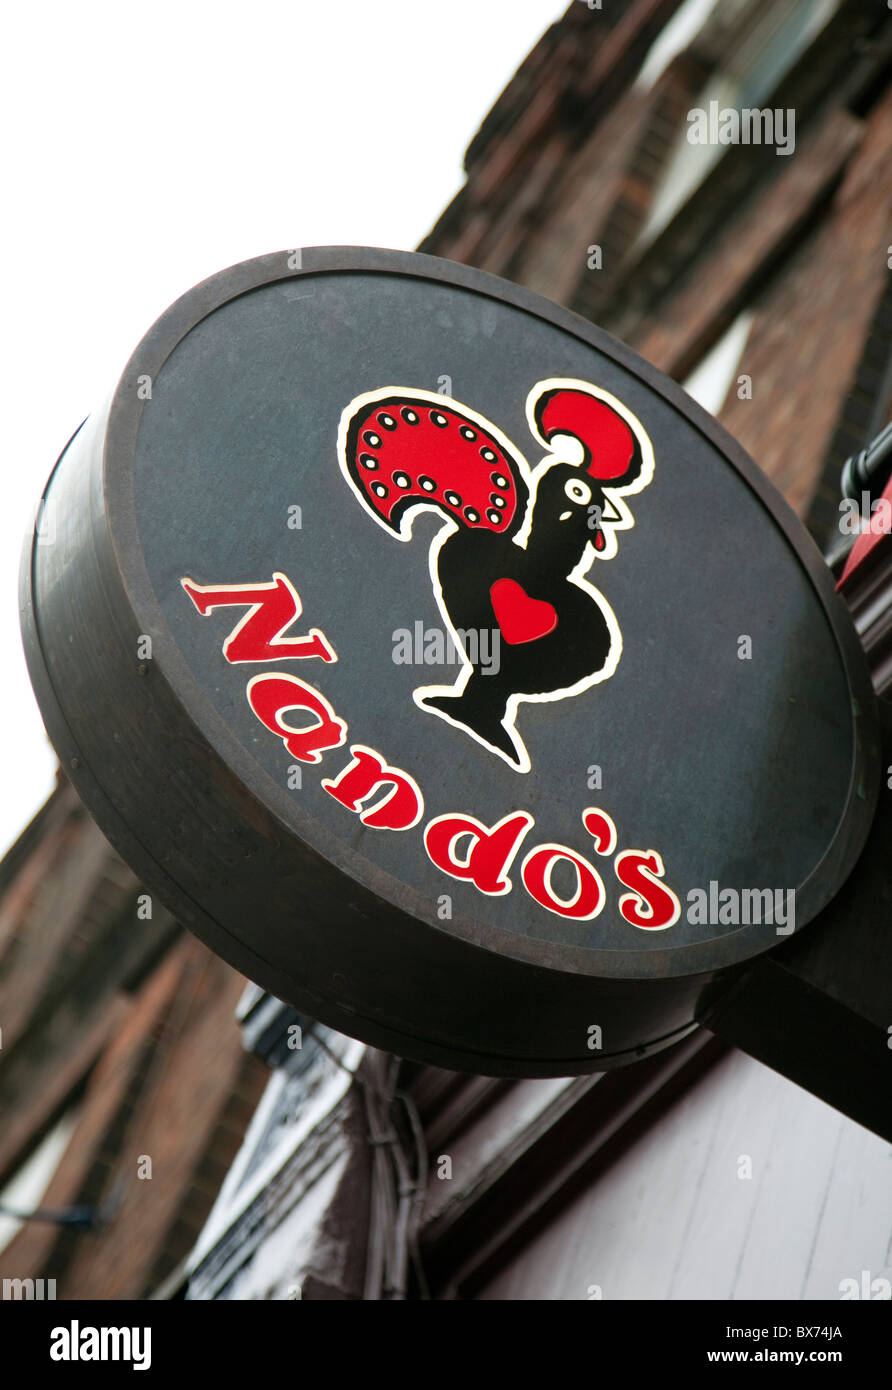 Nando's fast food restaurant, London Stock Photo